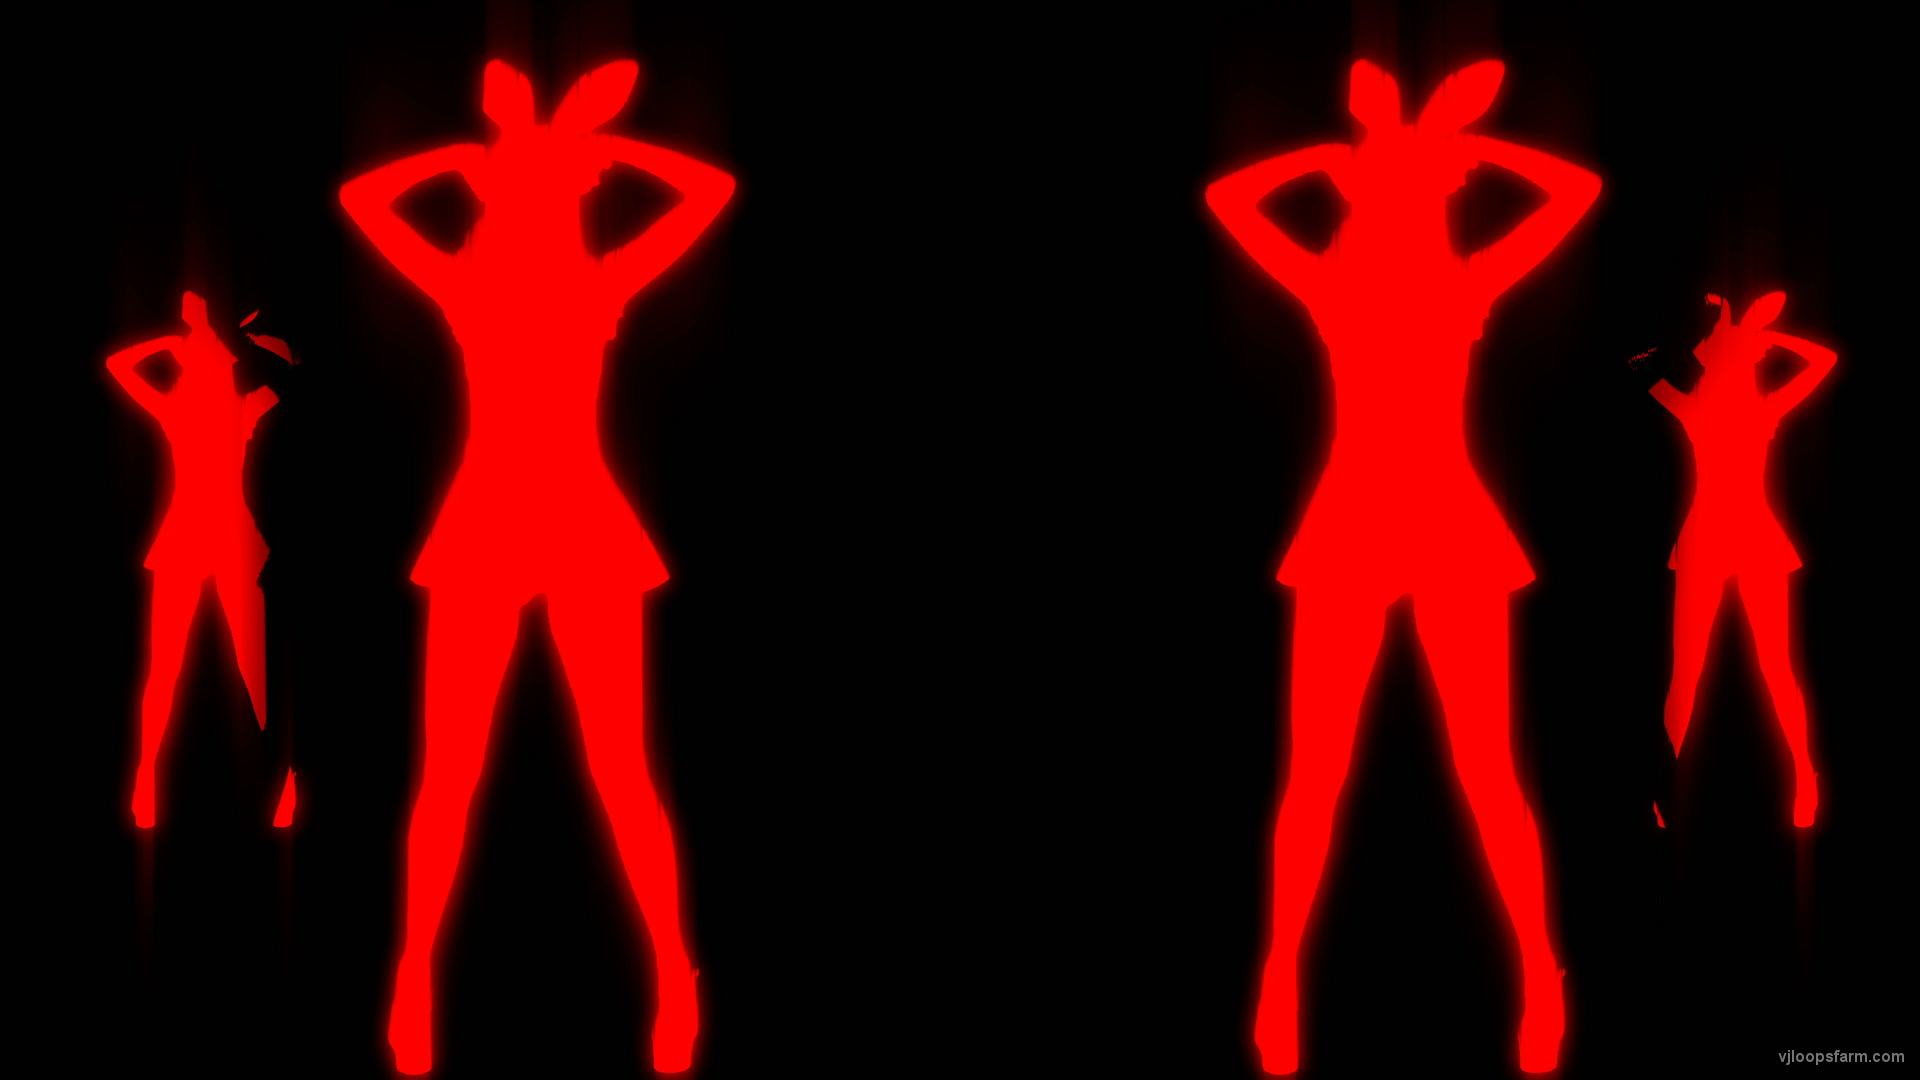 Red Strobe Bunny Girls Bodyguards Side Playboy Rabbit Dance 4K Video Art VJ Loop